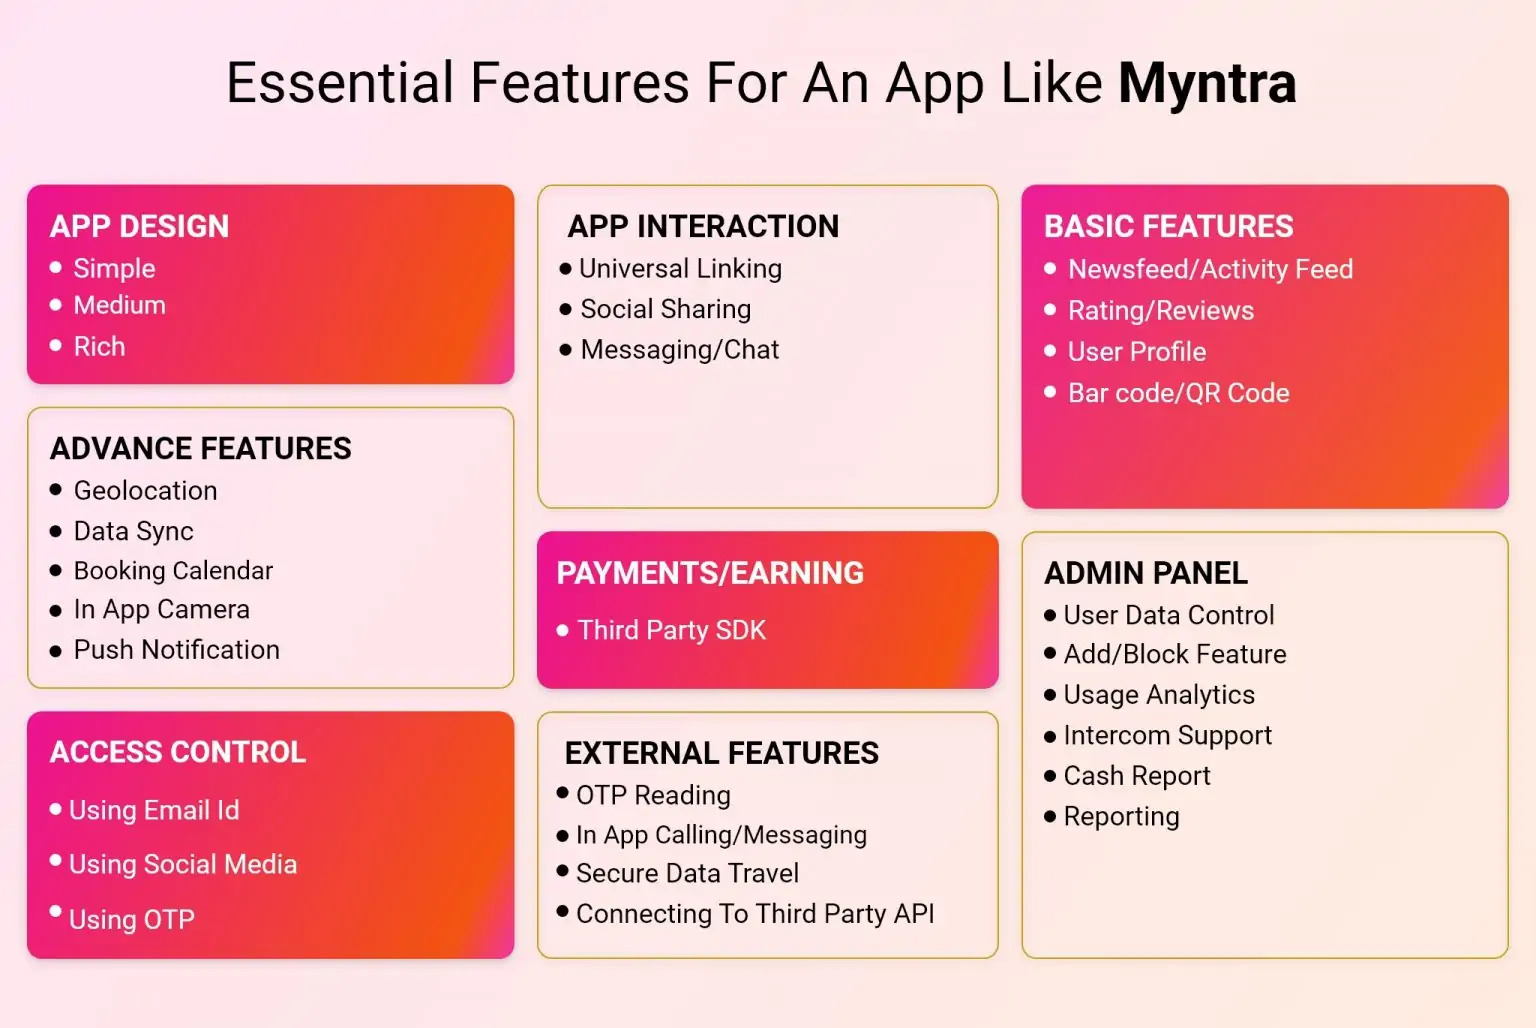 Myntra app like features